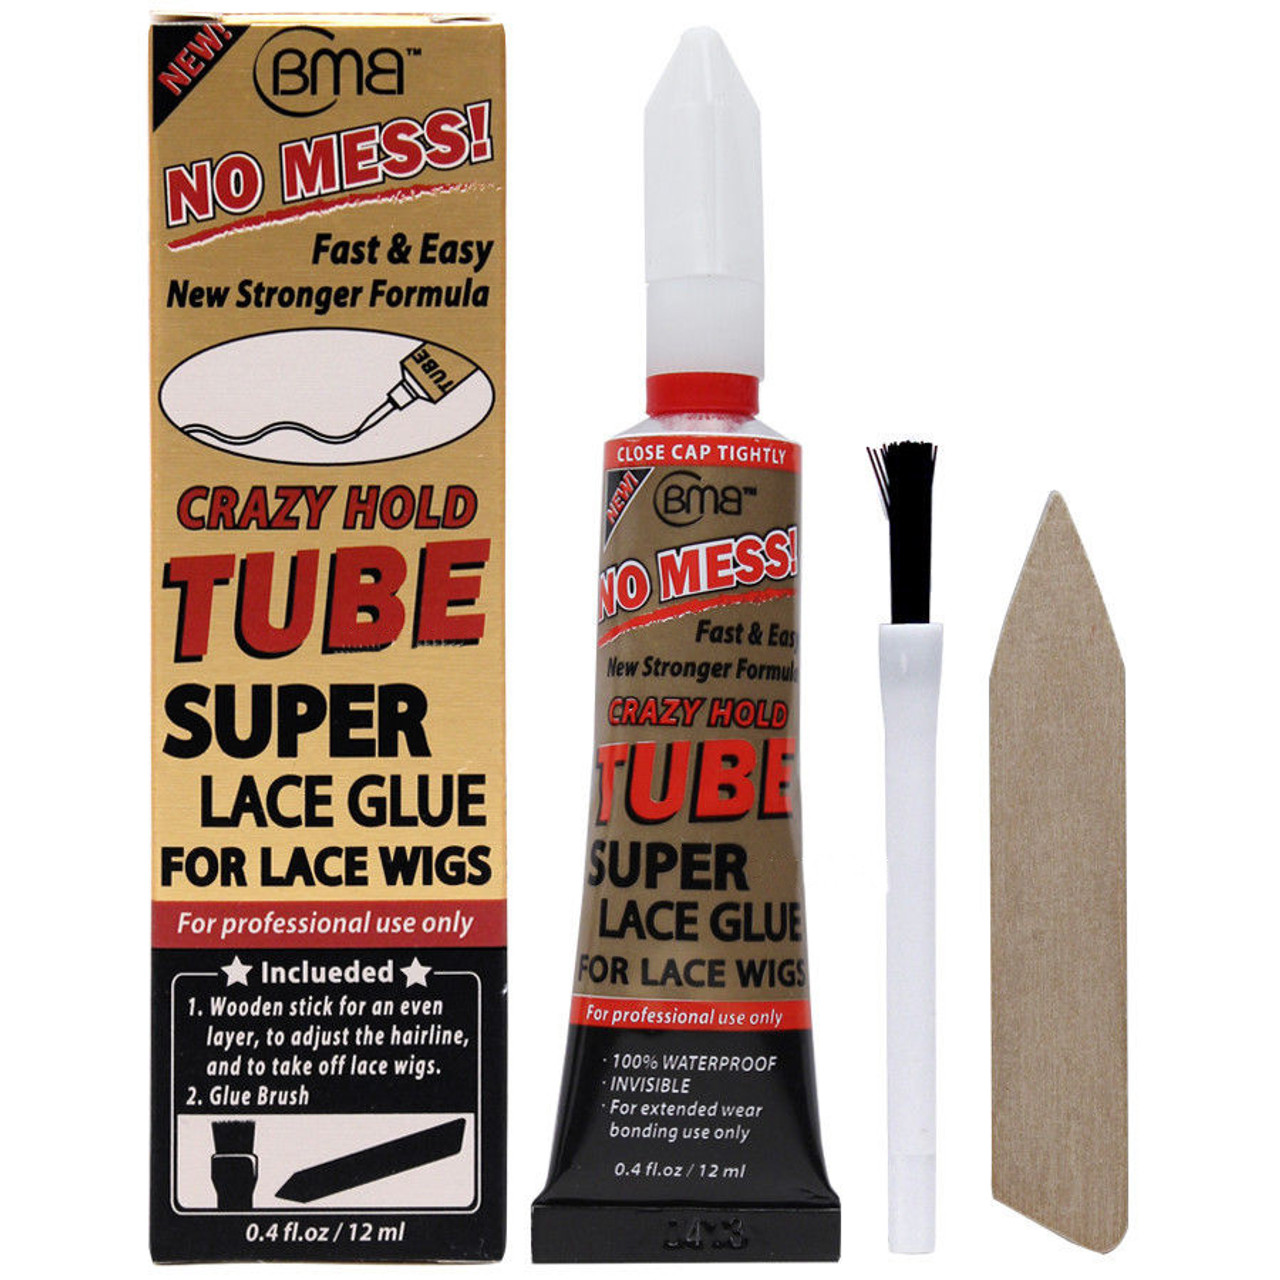 Bmb Super Lace Glue Tube For Lace Wigs, 1 Oz. 